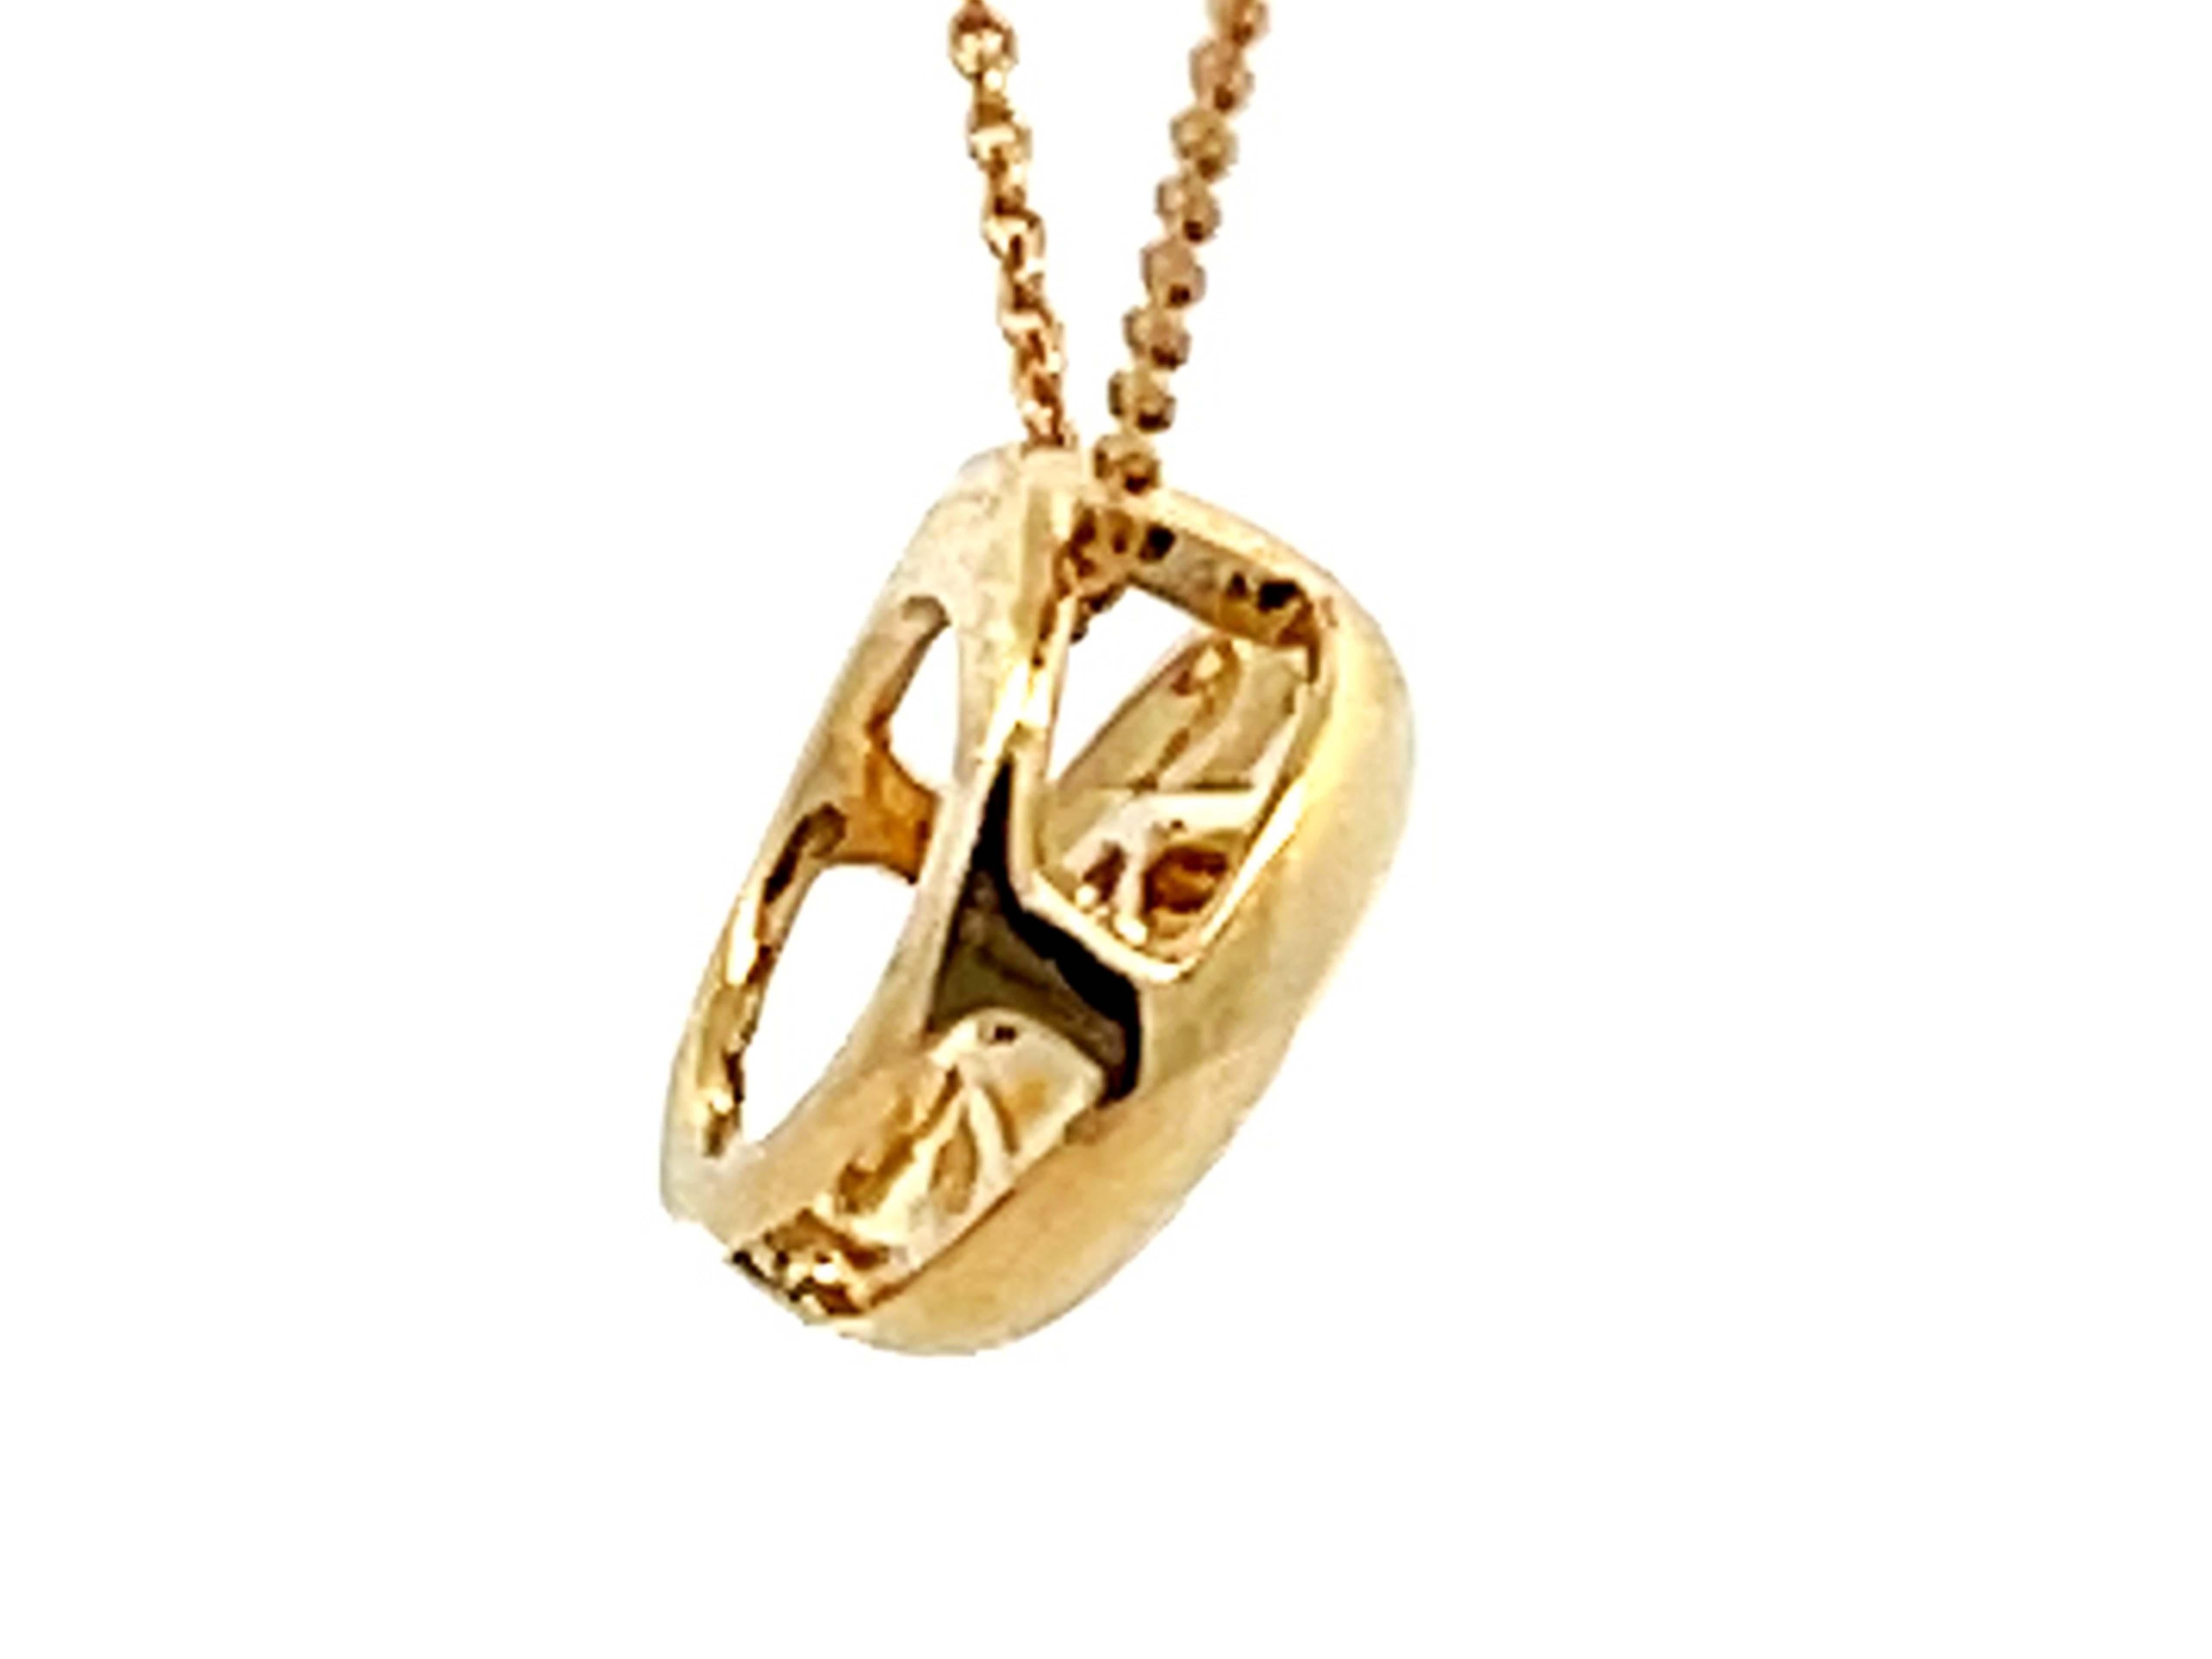 Brilliant Cut Small Round Diamond Pendant Necklace 18k Yellow Gold For Sale